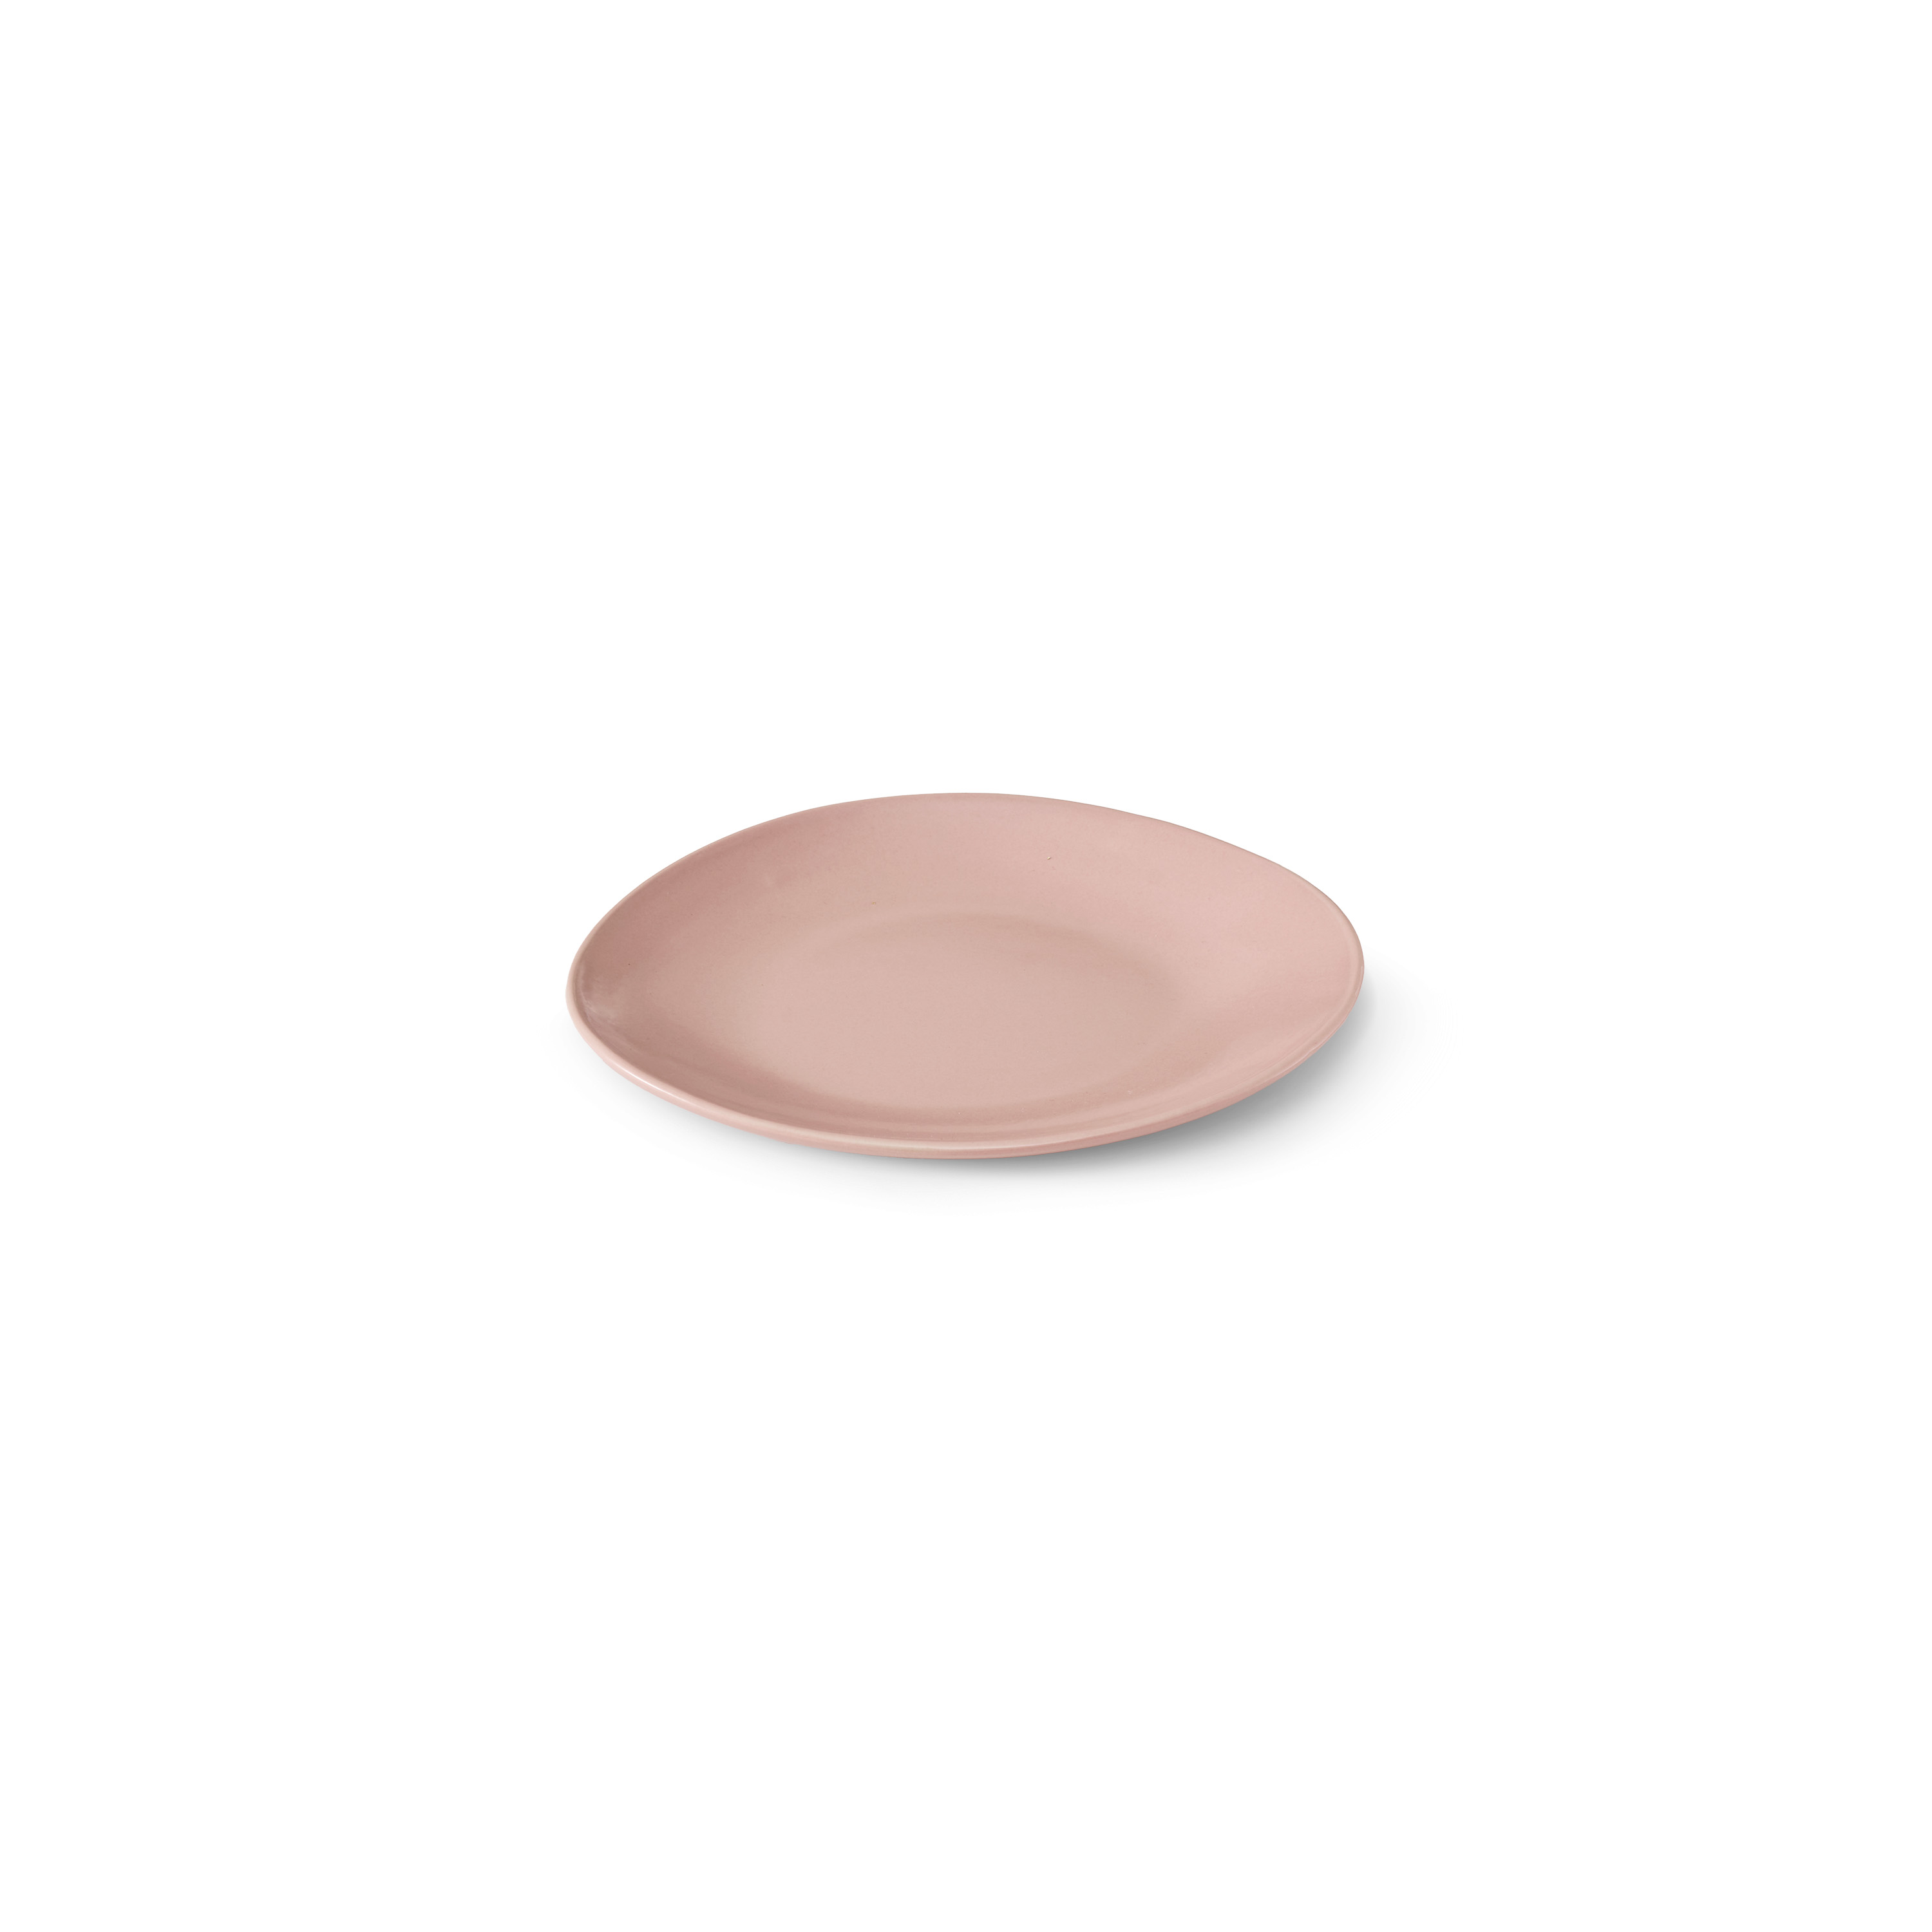 Tonkin Round Plate S: Dusty pink